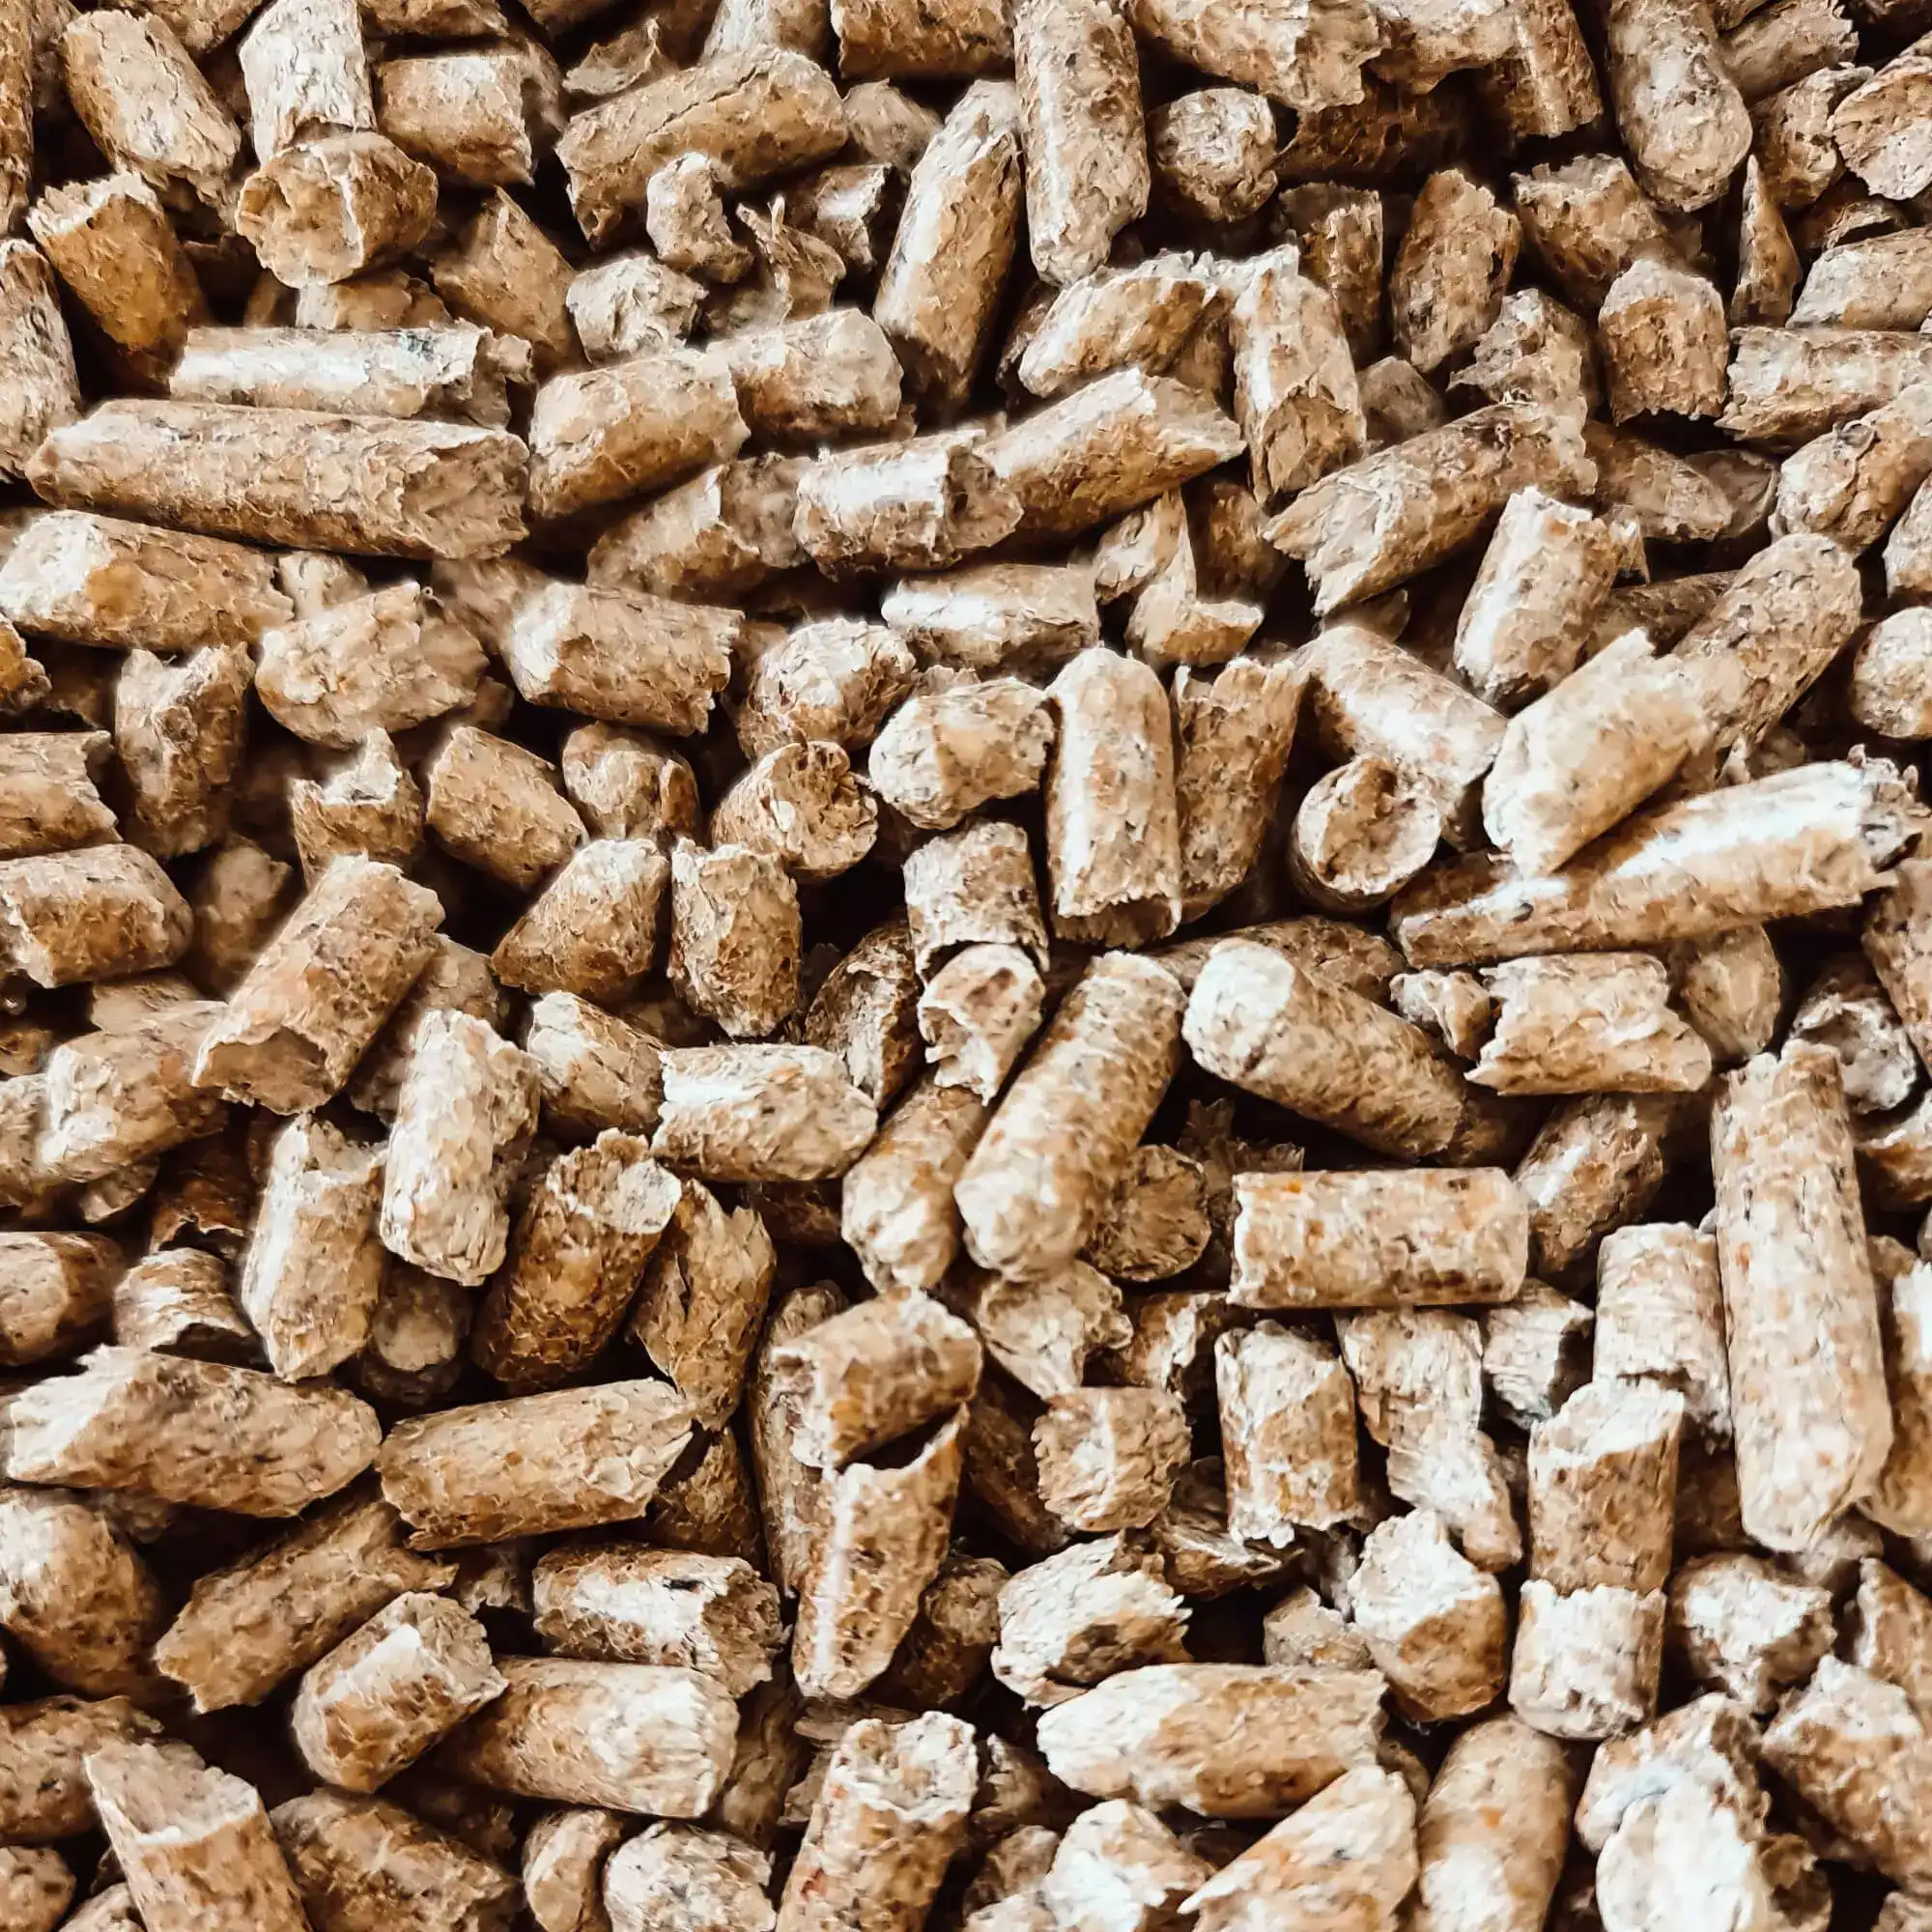 Premium white wood pellets 6 mm, 15 kg - Stable equipment